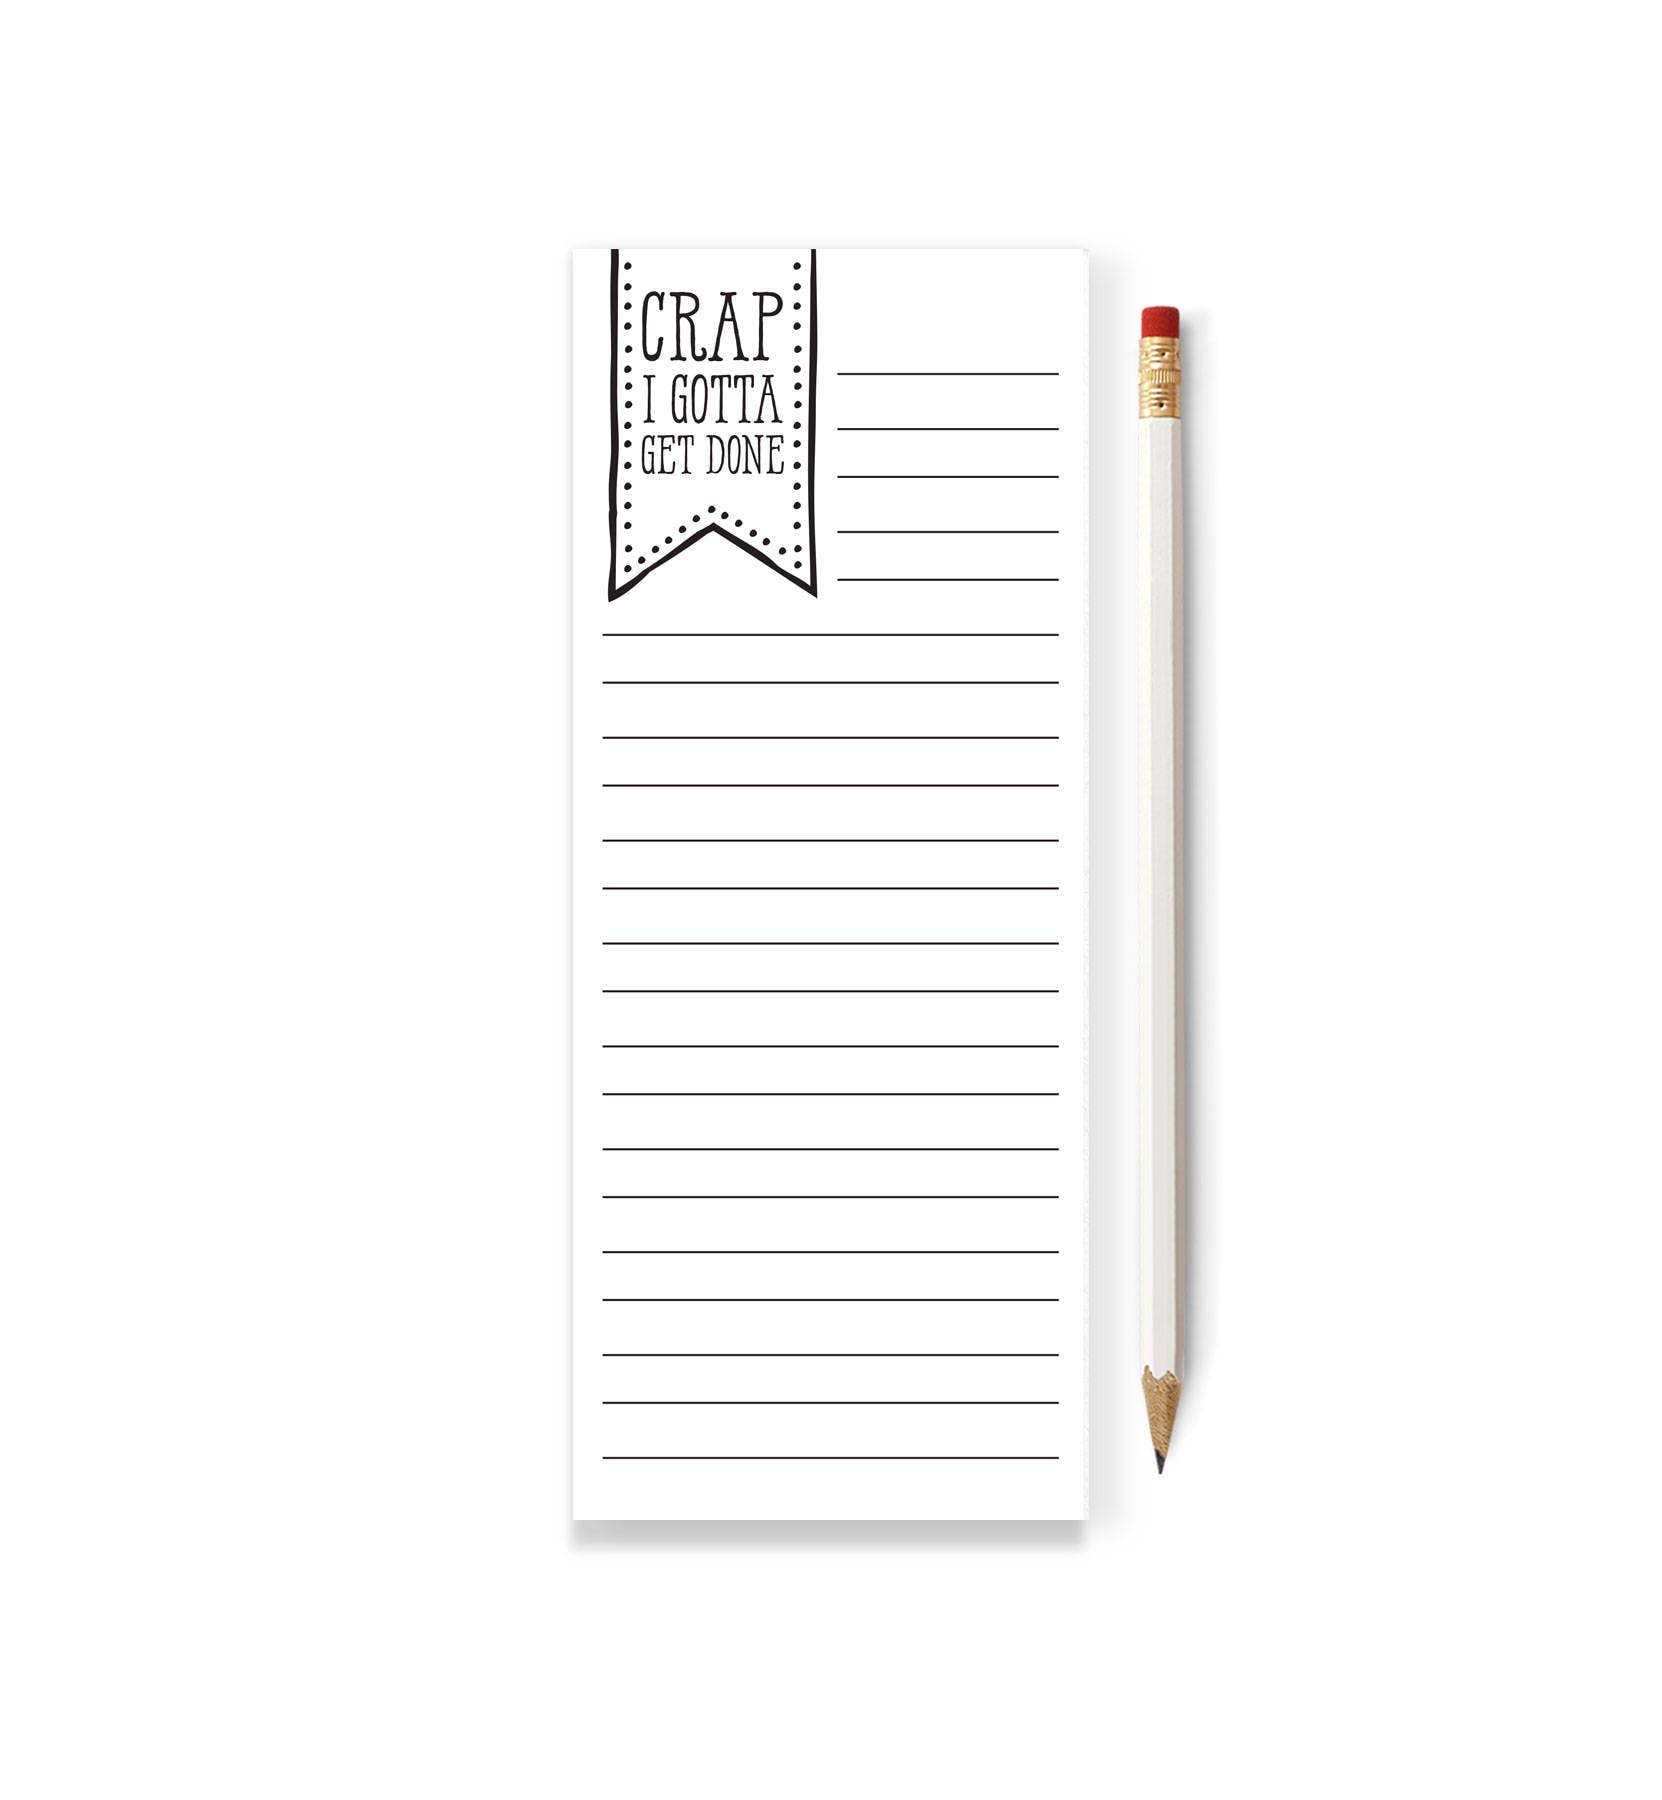 Tiramisu Paperie - Crap I Gotta Do Skinny Notepad